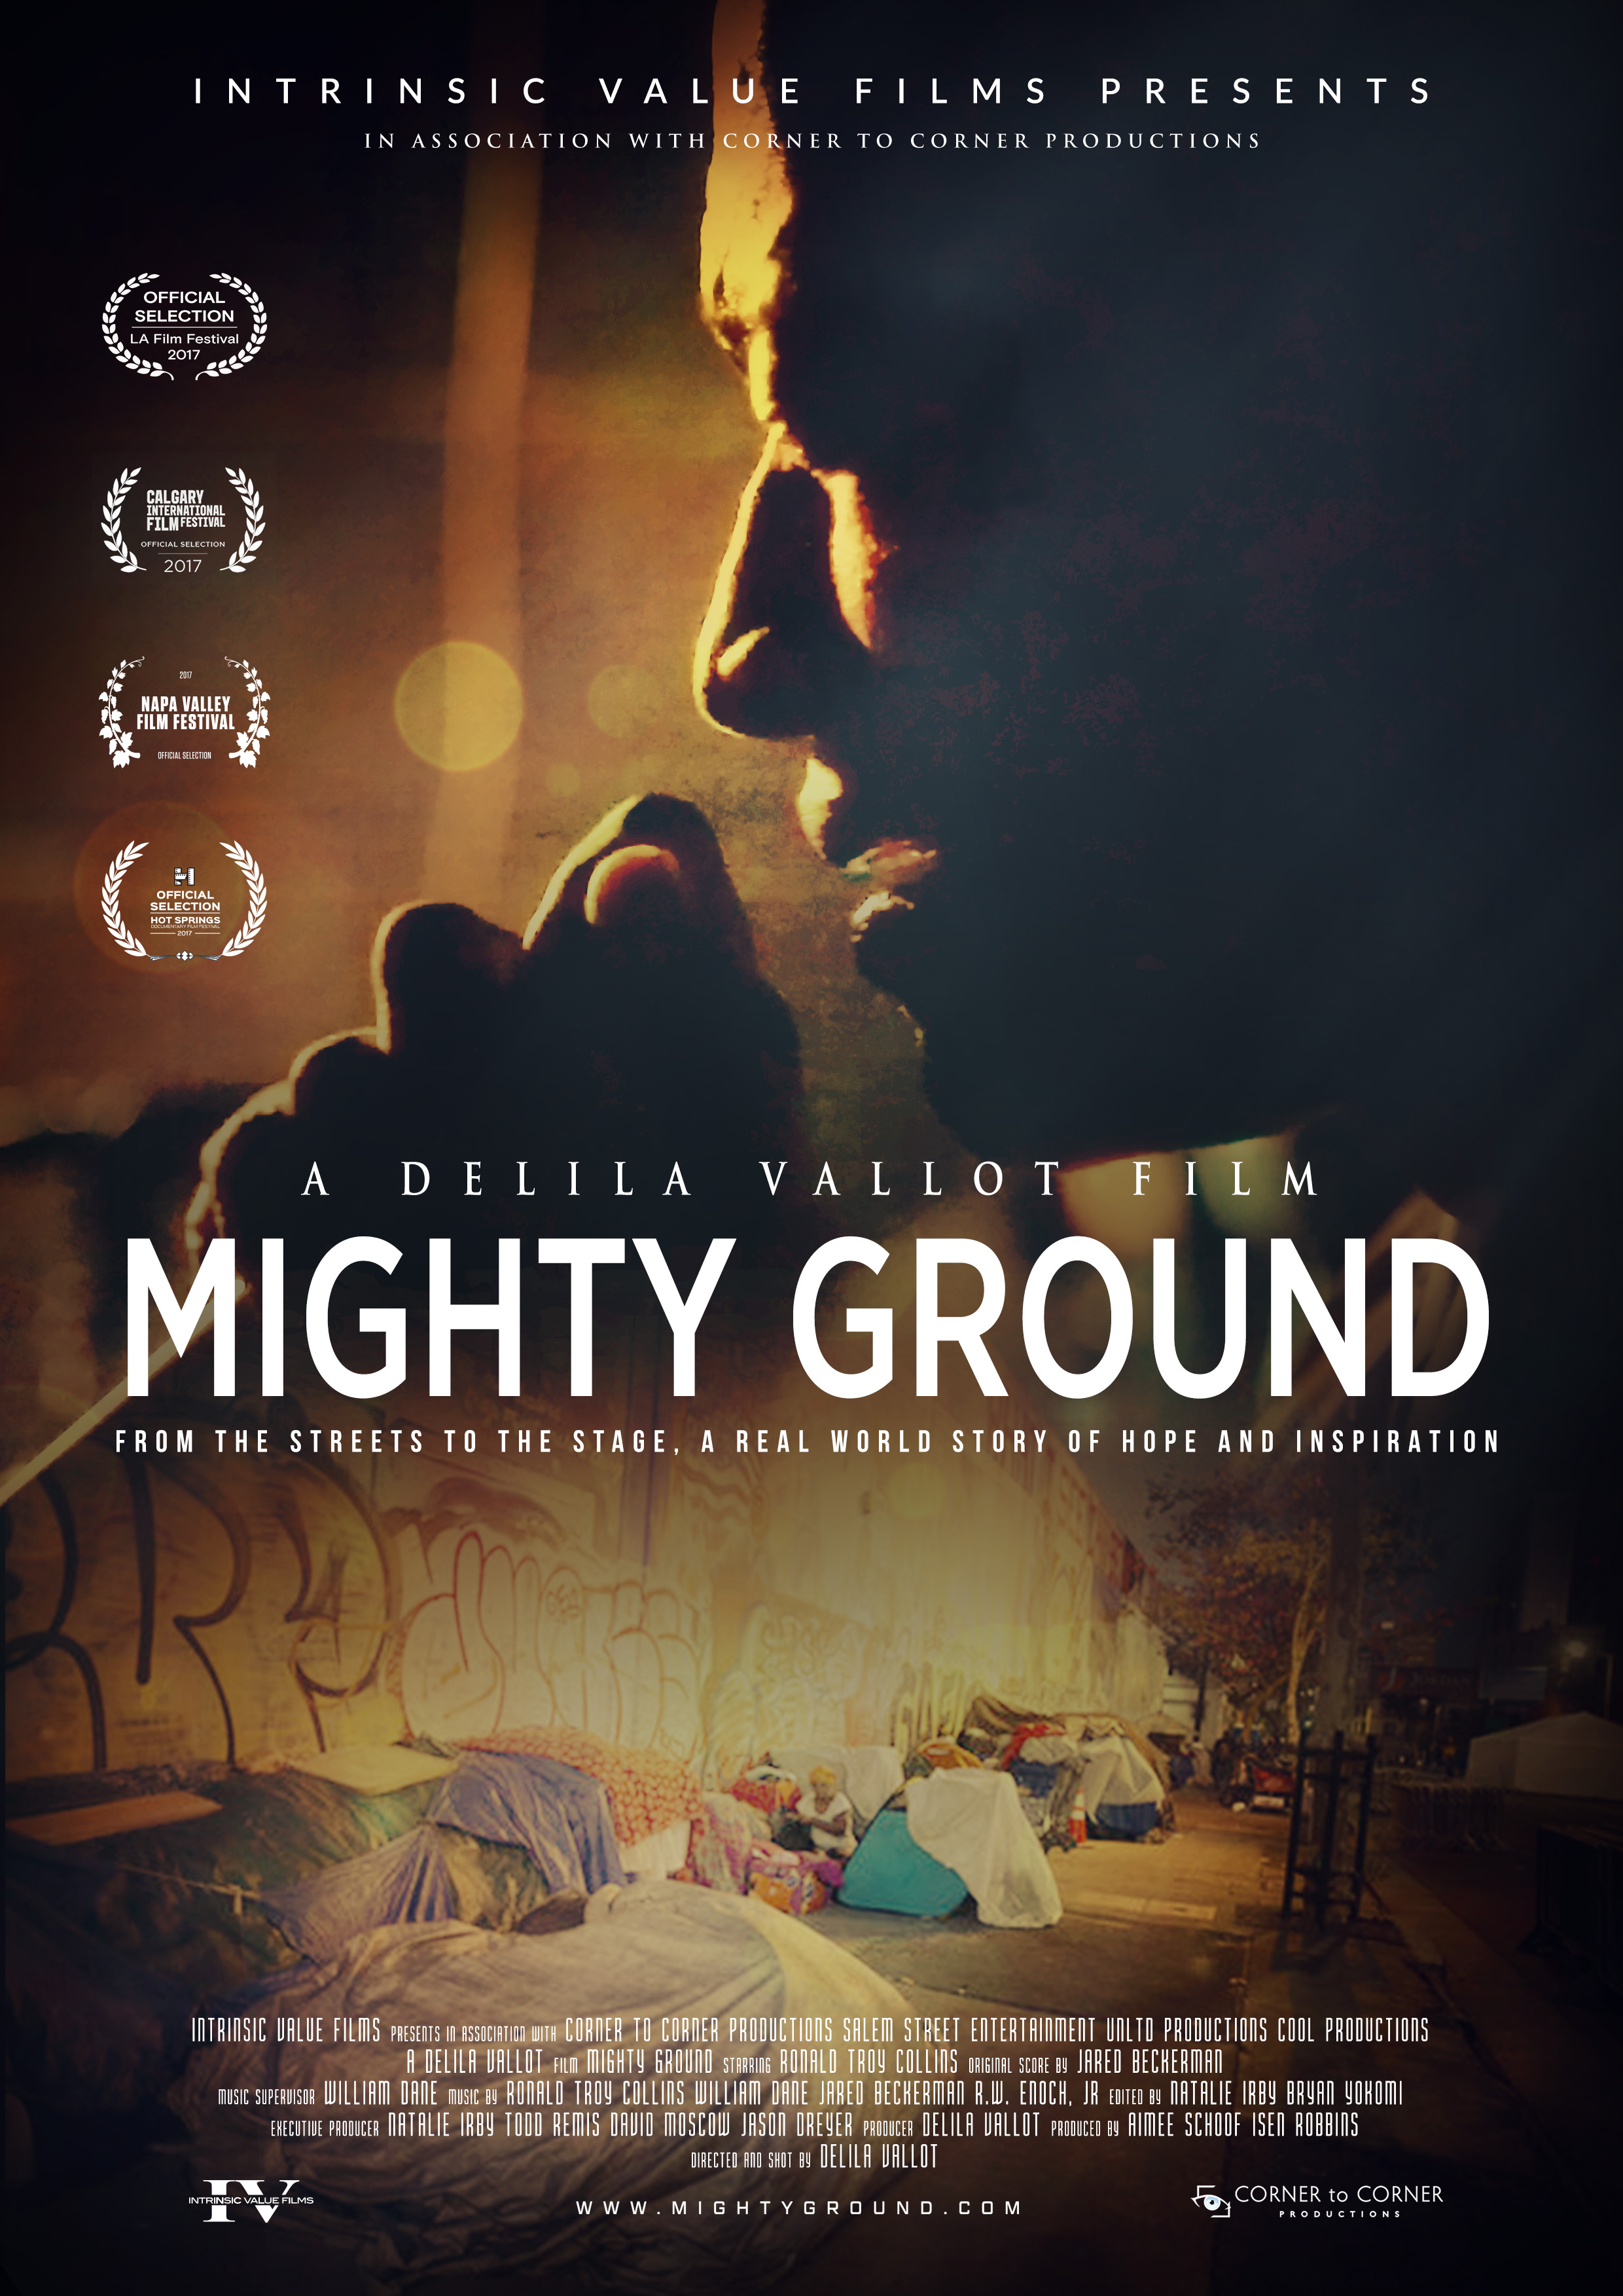 Nonton film Mighty Ground layarkaca21 indoxx1 ganool online streaming terbaru